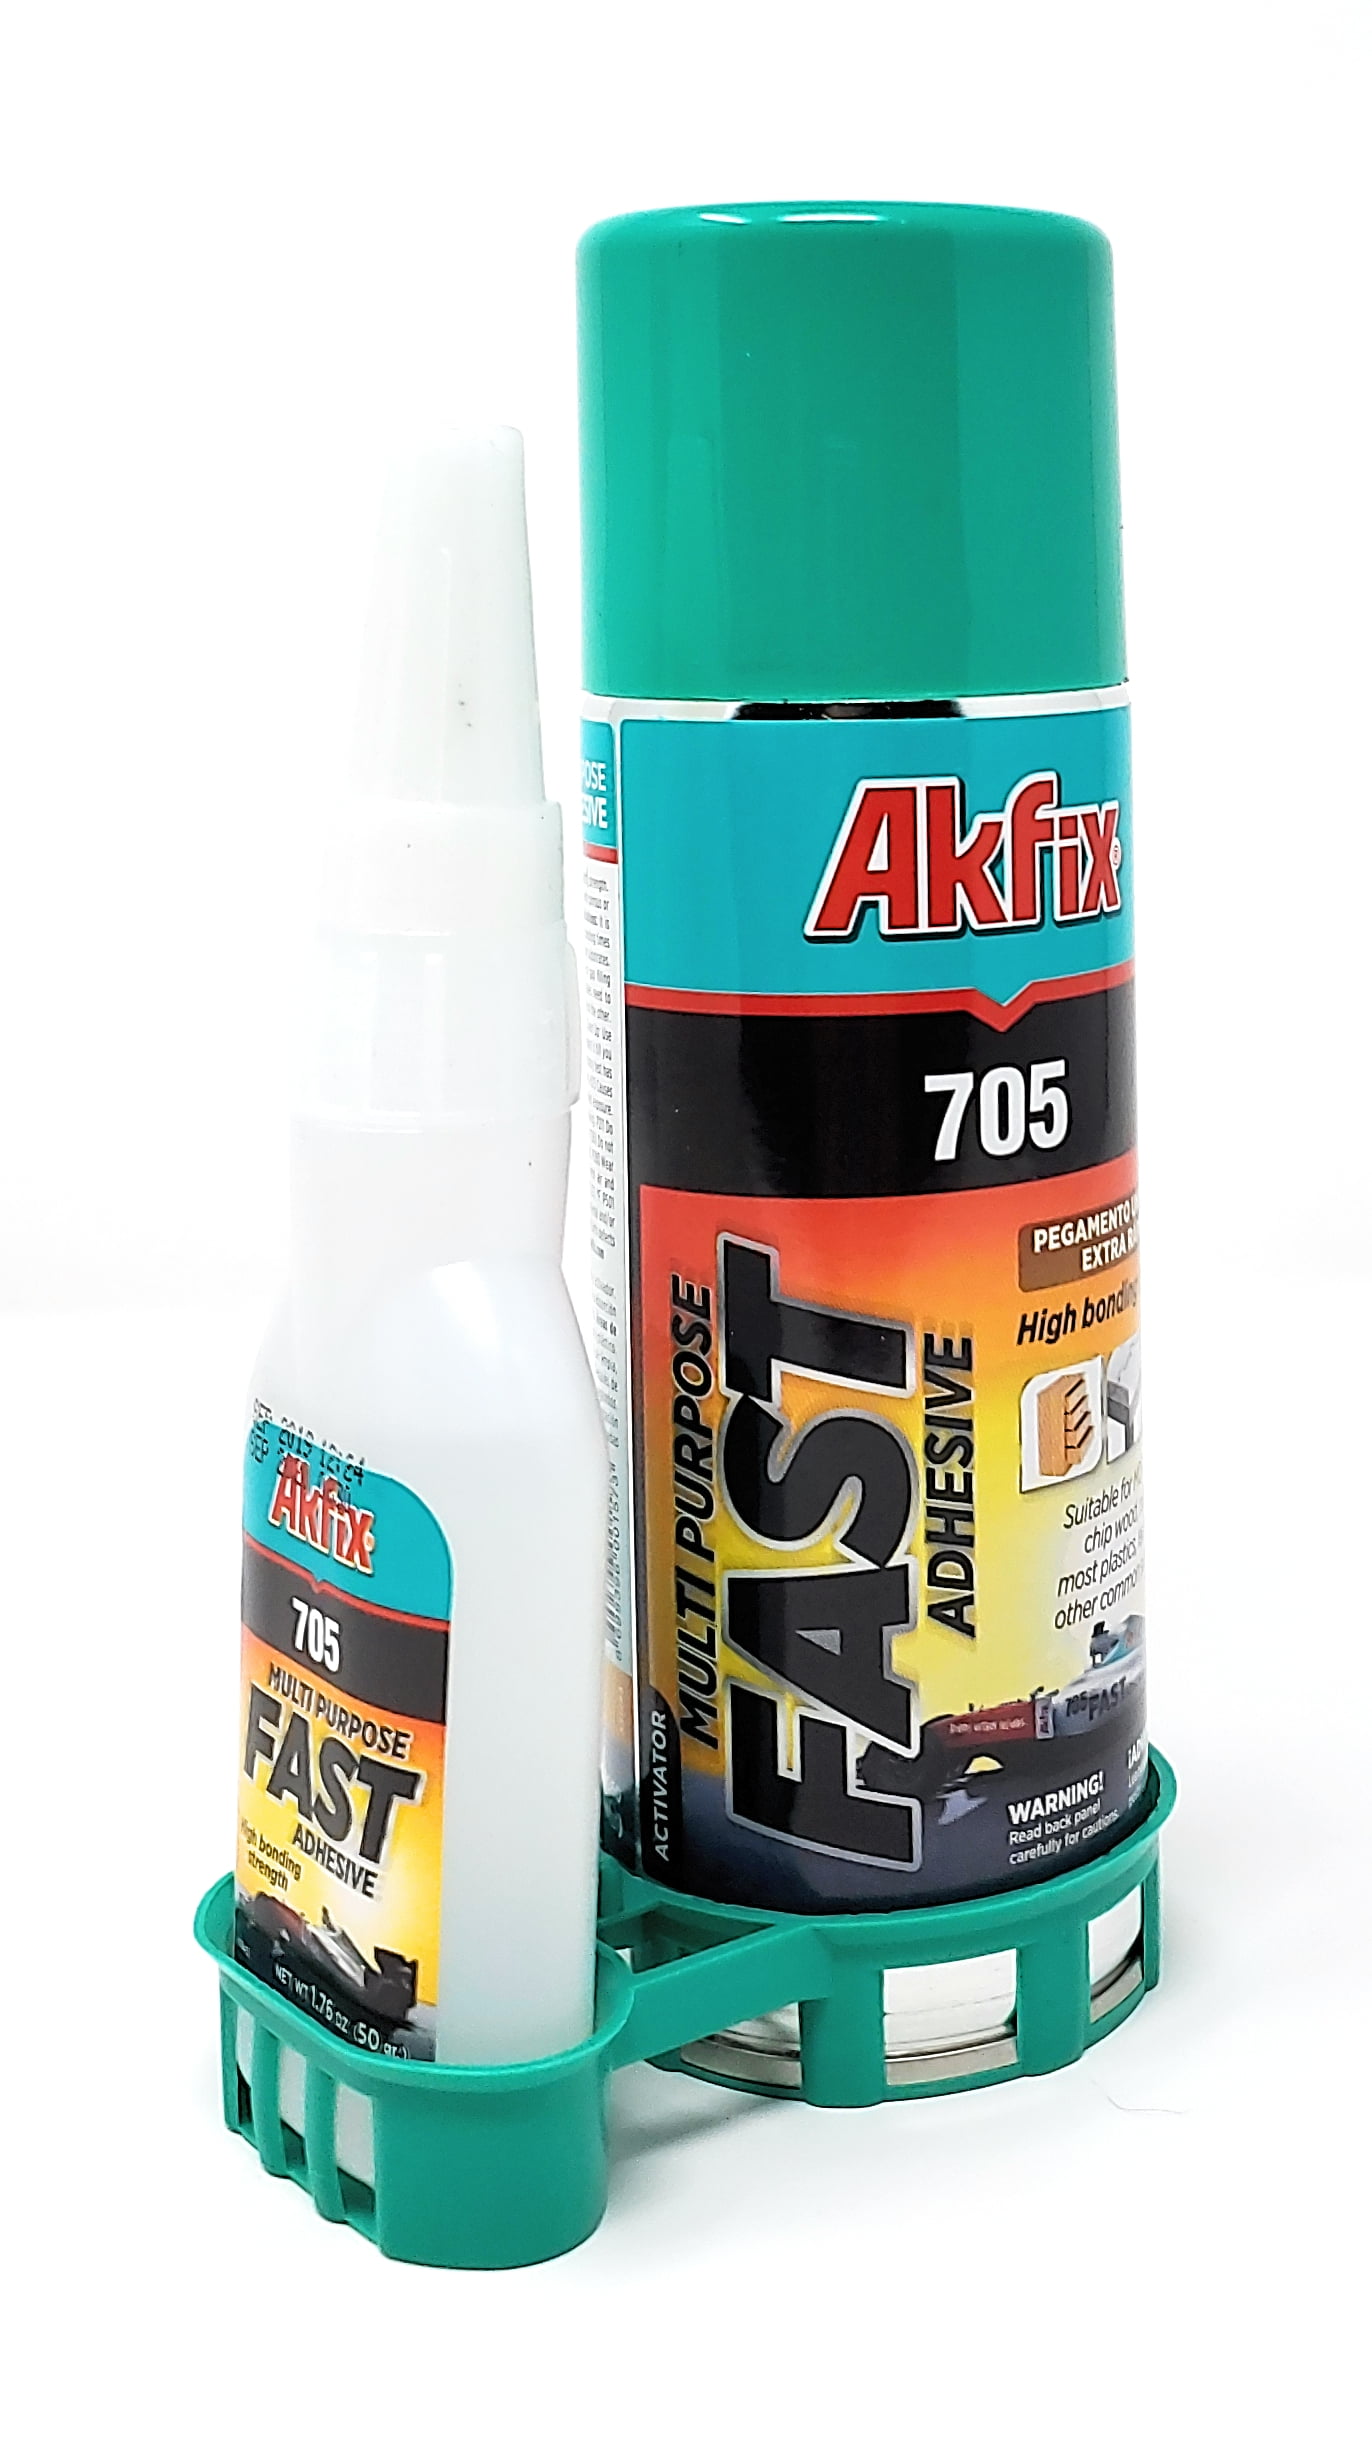 Mitreapel Super CA Glue 4.6 oz. with Spray Adhesive Activator 16.9 fl oz. - Glue